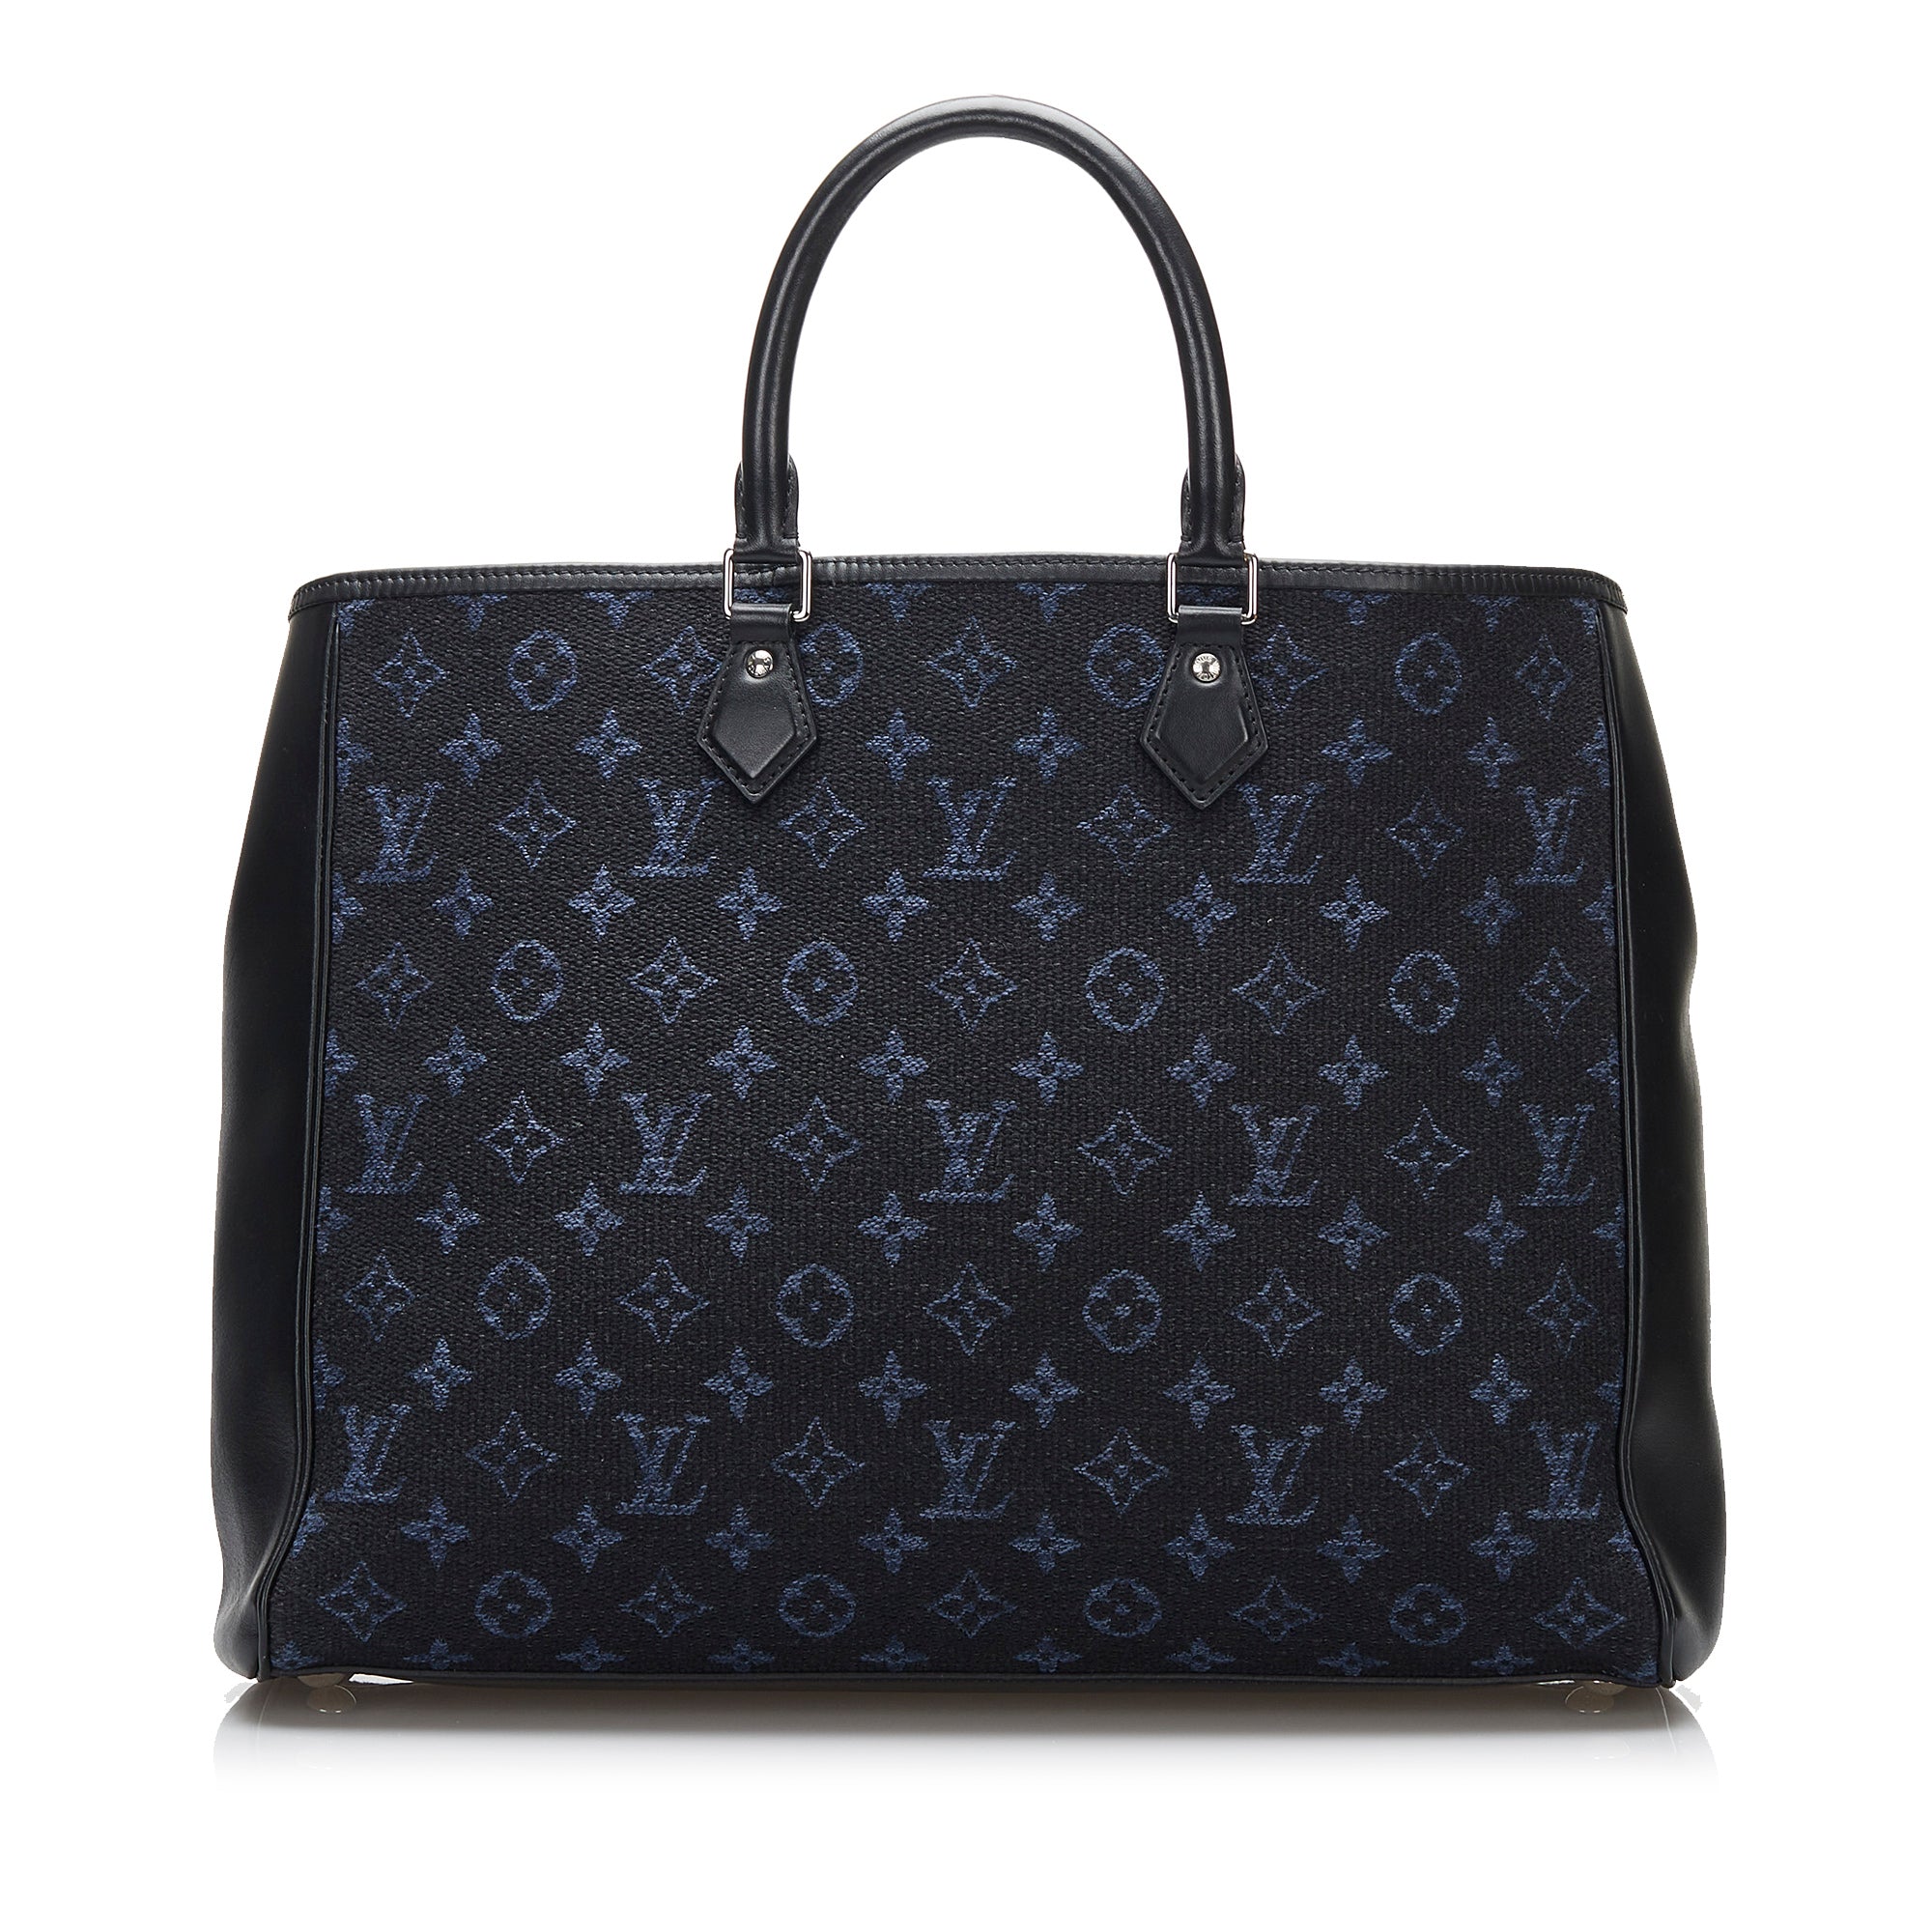 Louis Vuitton Limited Edition Navy Jacquard Monogram Fabric